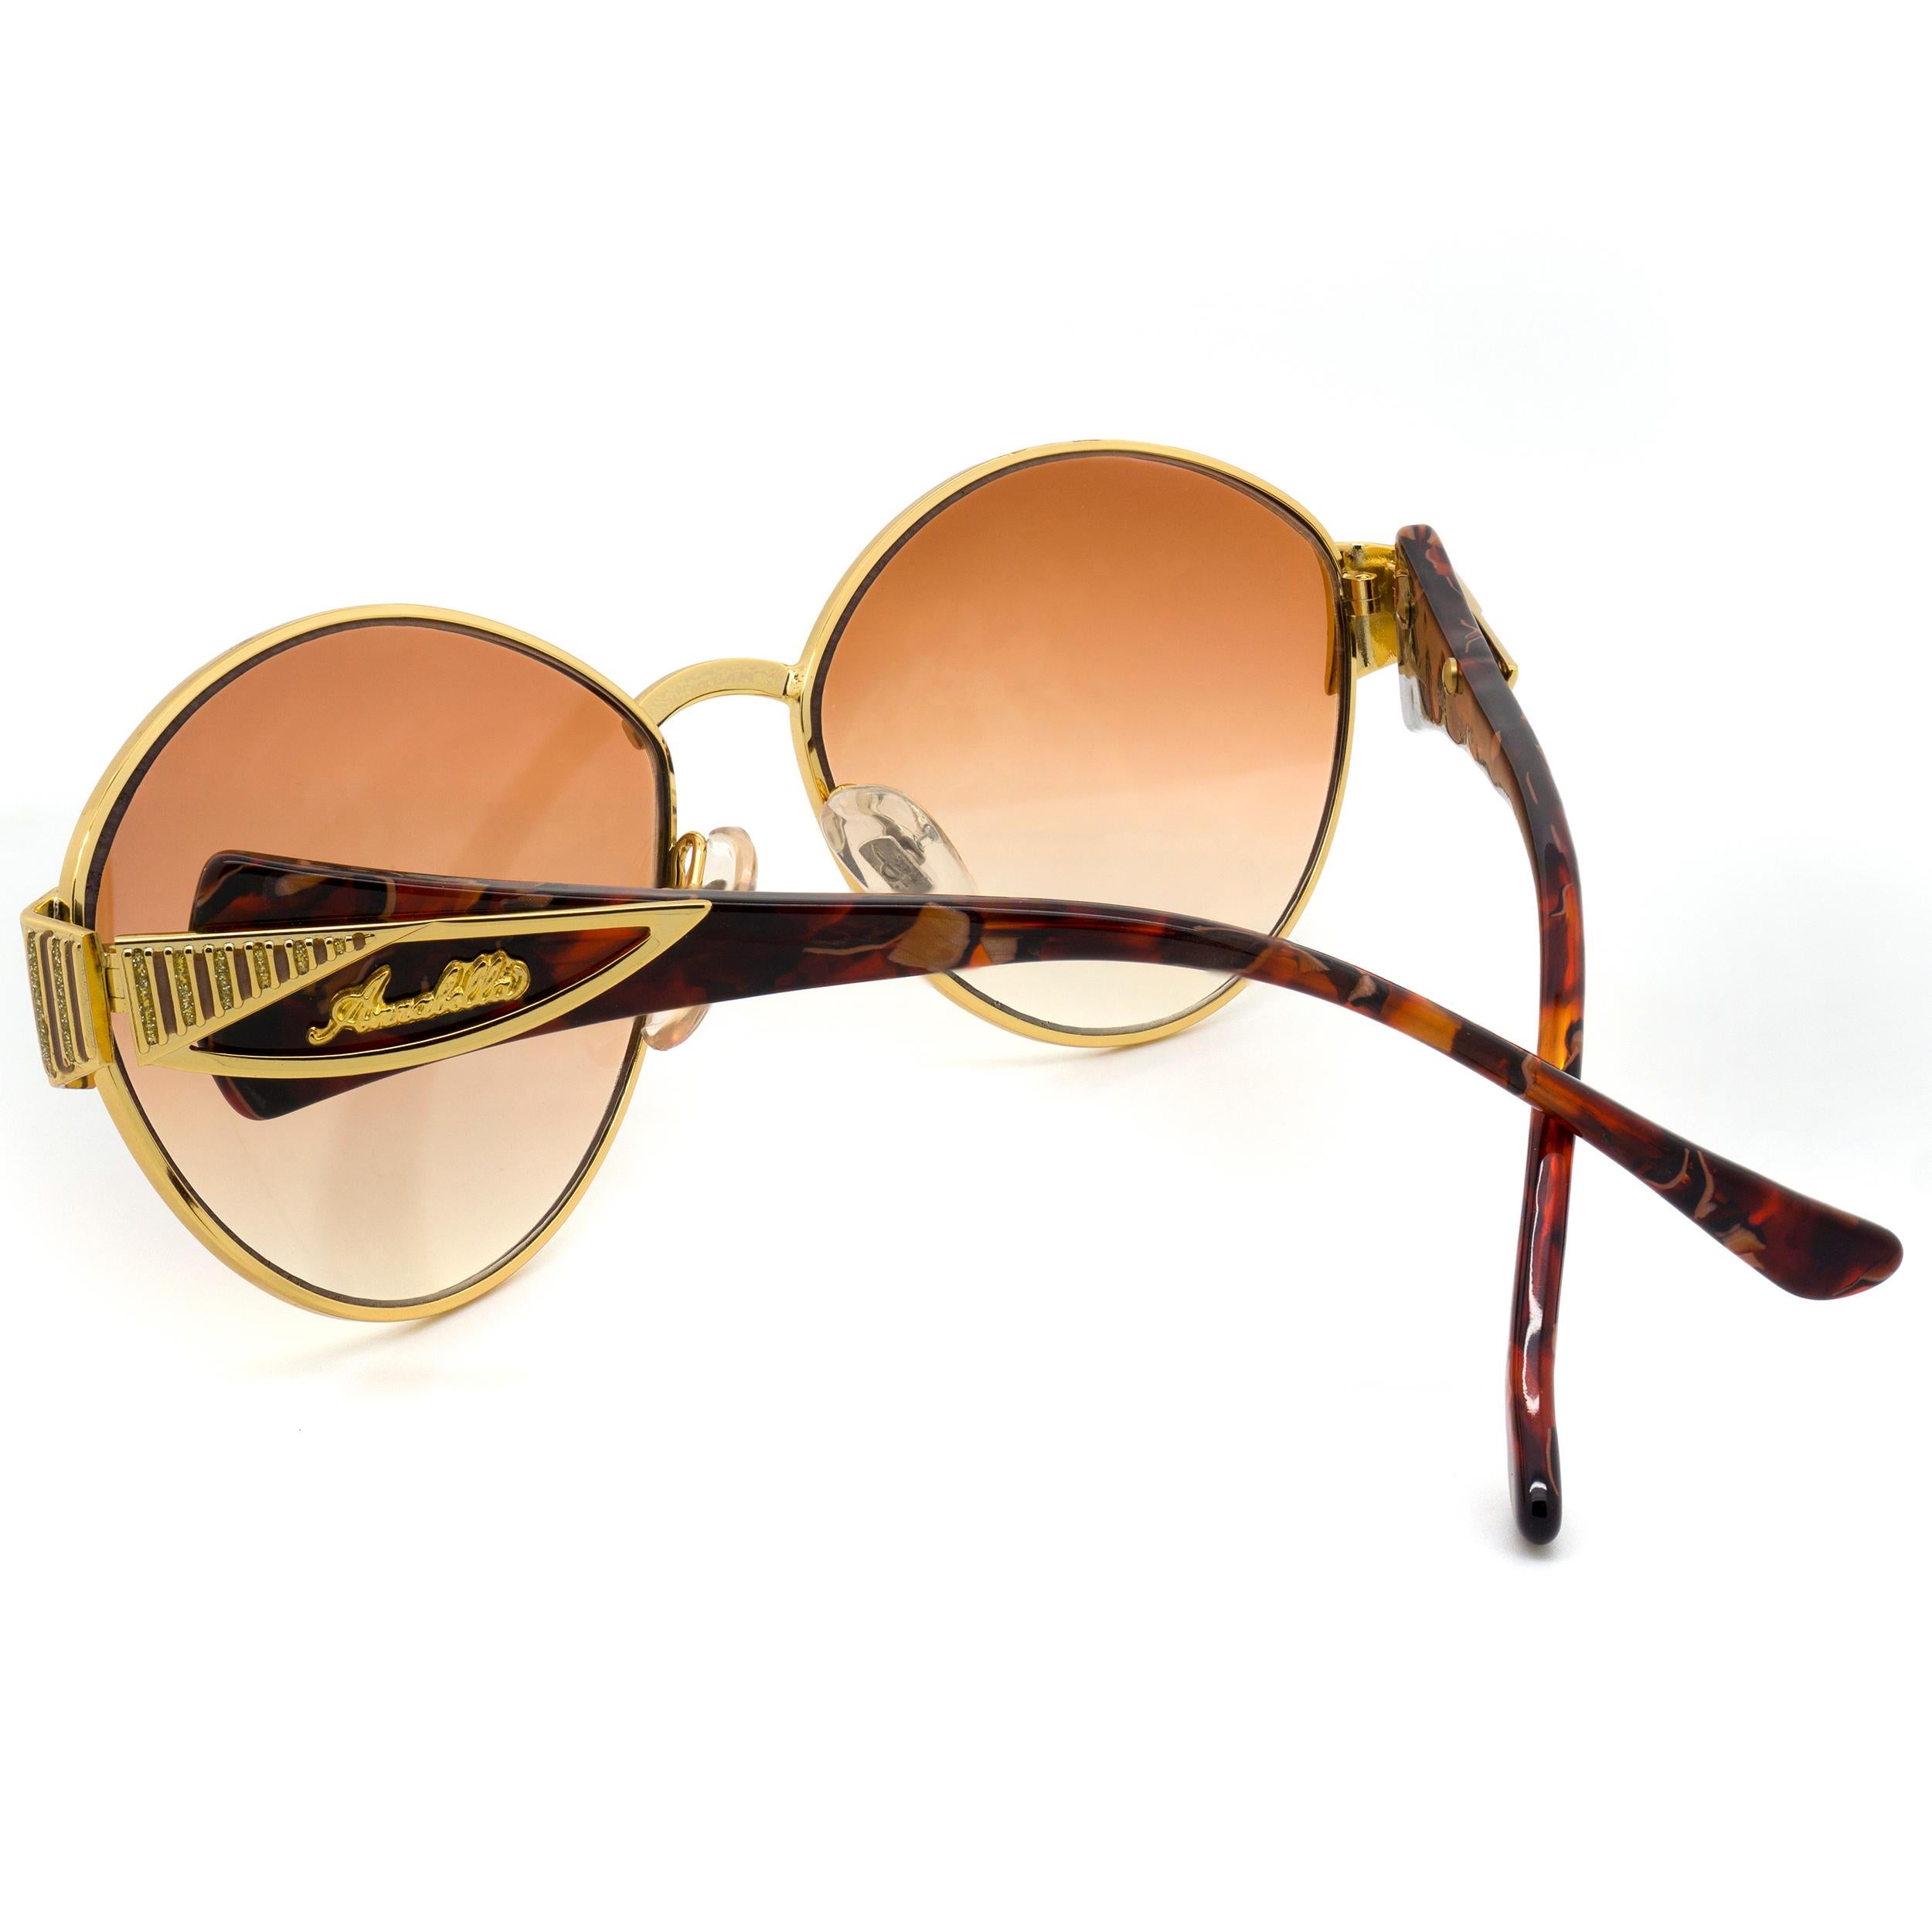 Beige Simonetta Ravizza by Annabella 80s oversized vintage sunglasses